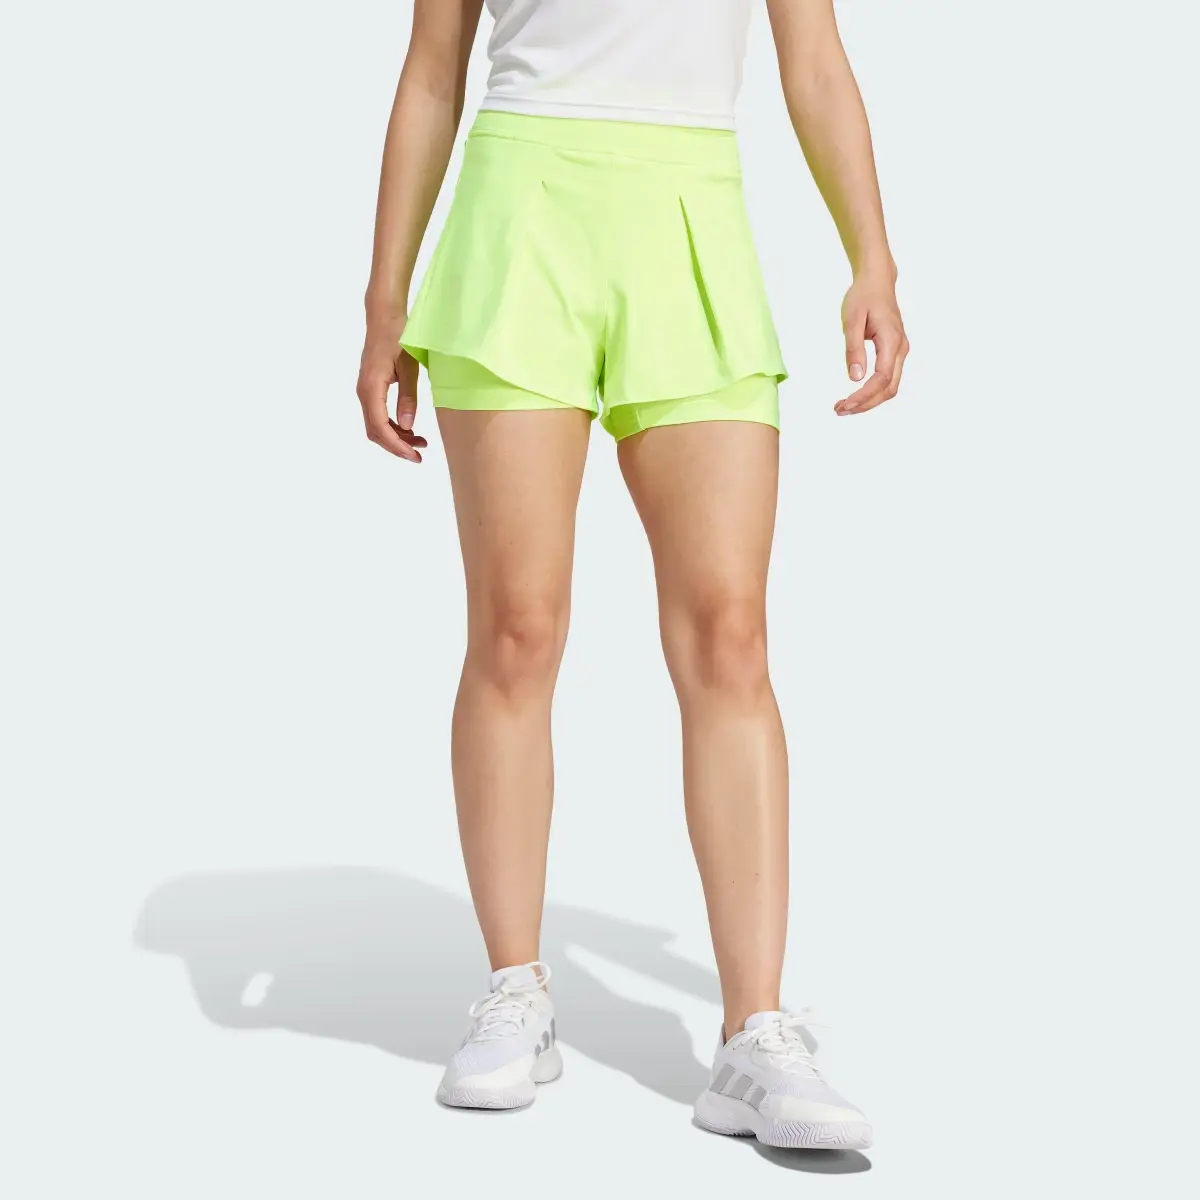 Adidas Tennis Match Shorts. 1